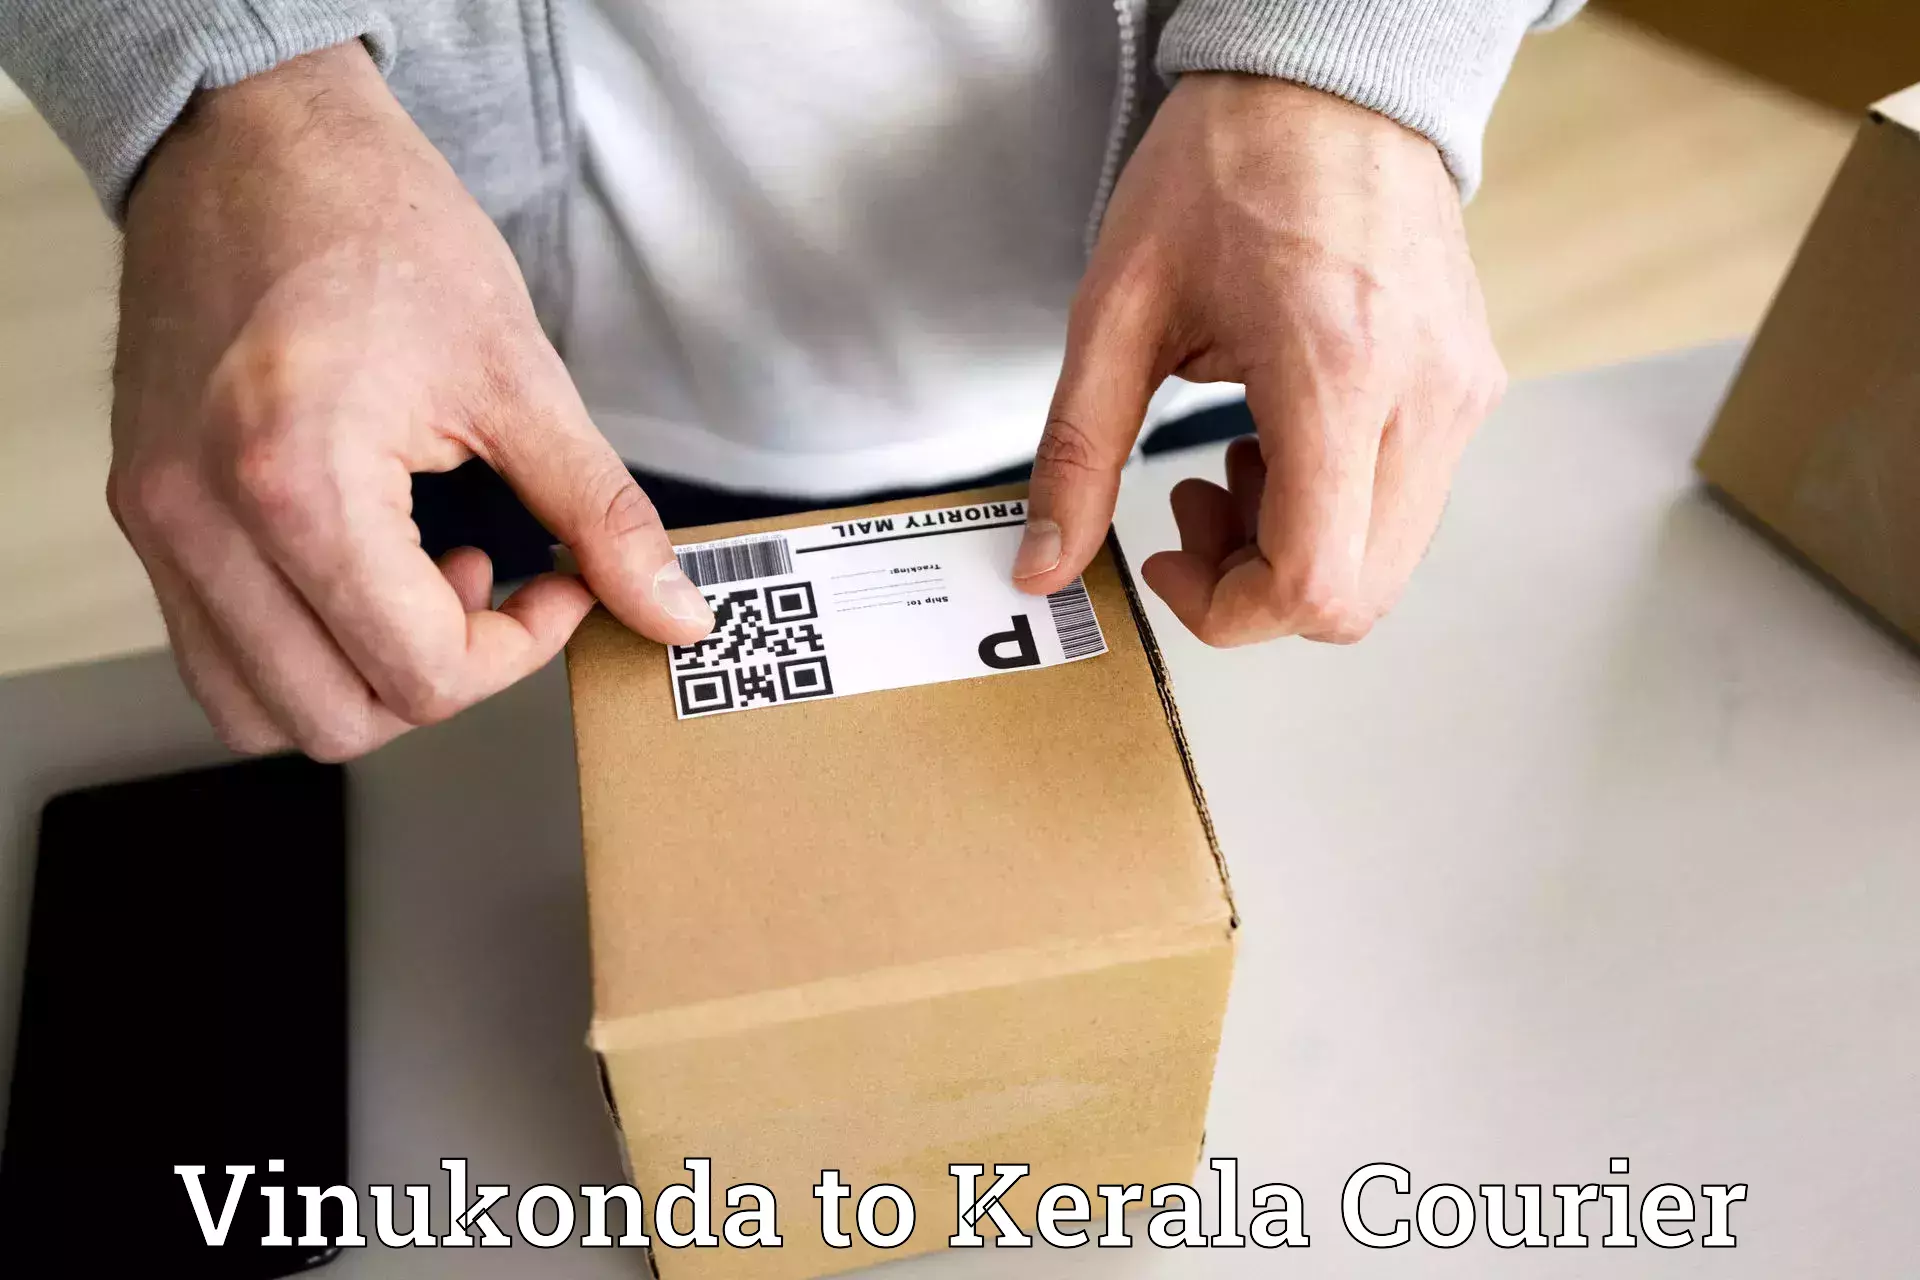 Same-day delivery options Vinukonda to Trivandrum